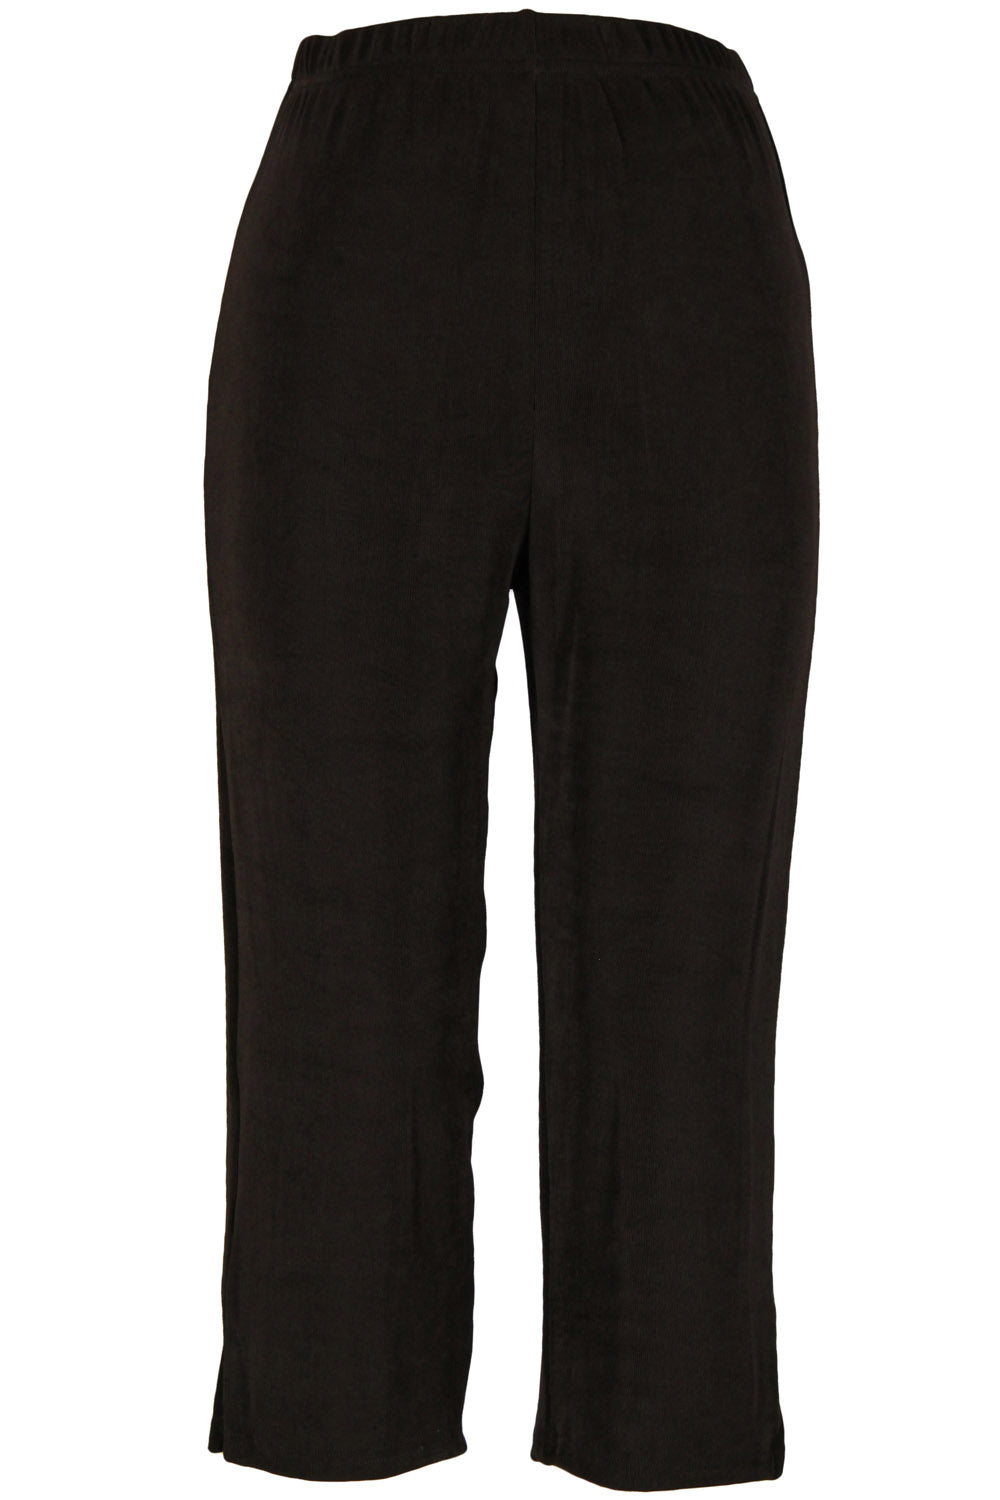 Jostar Women's Non Iron Capri Pants, 502AY - Jostar Online